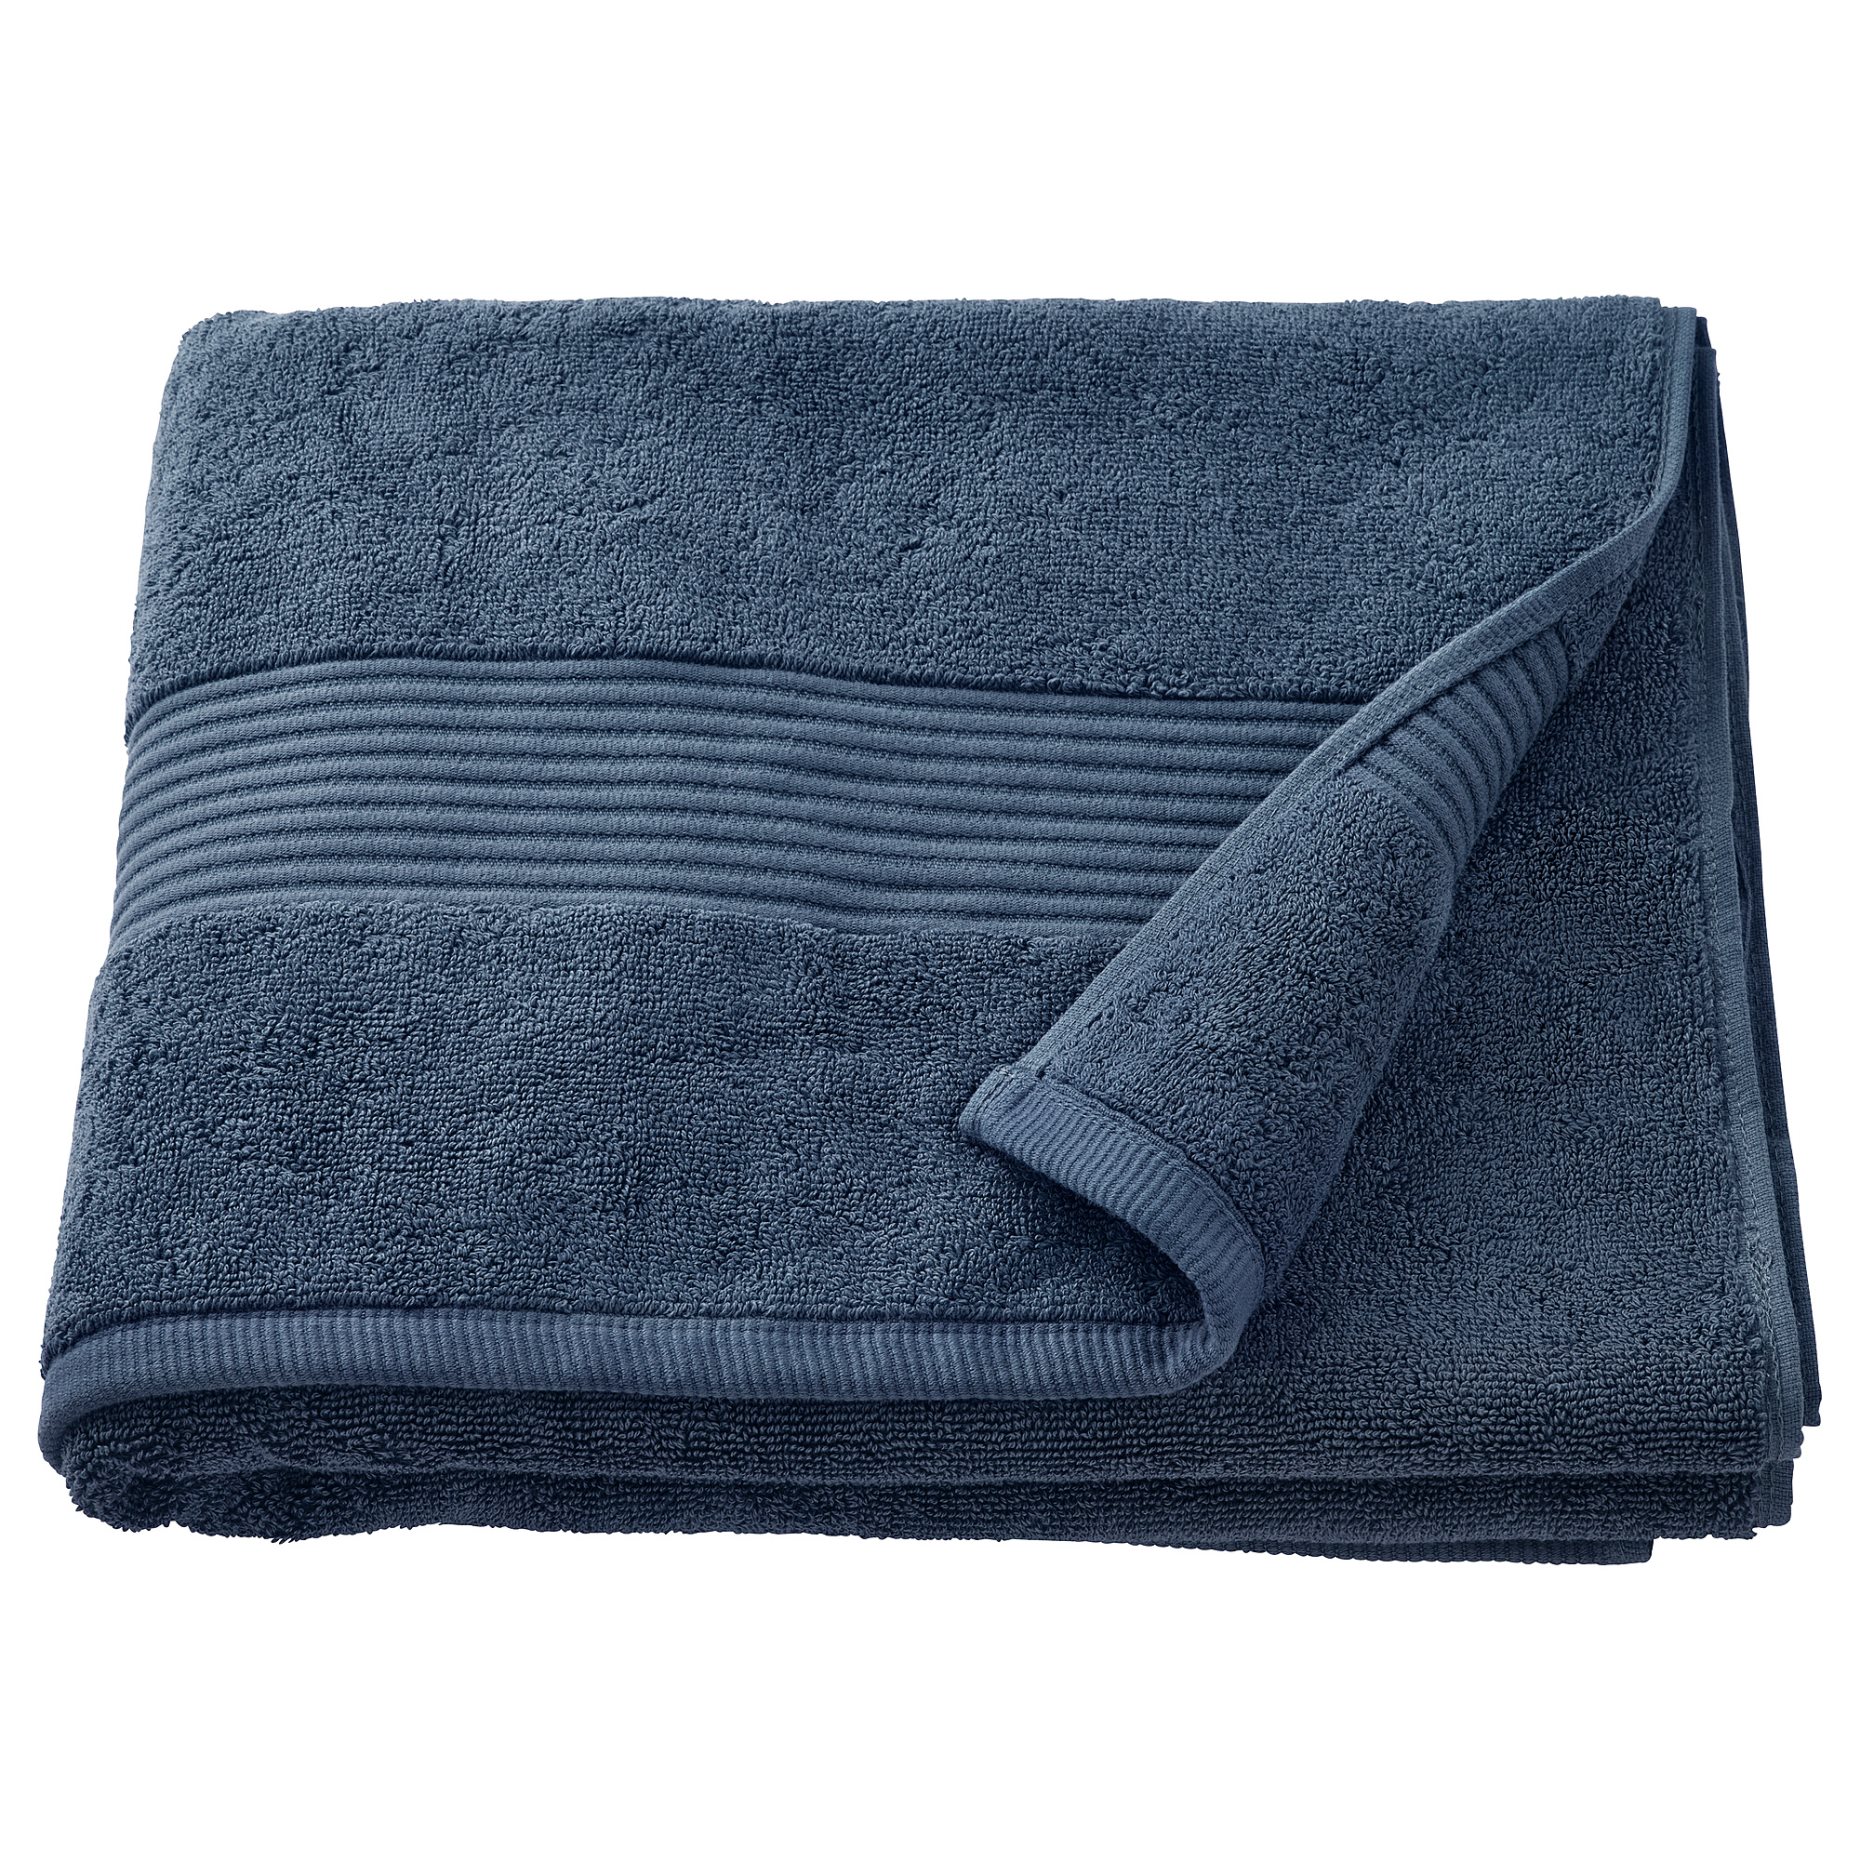 FREDRIKSJÖN, bath towel, 70x140 cm, 104.966.70